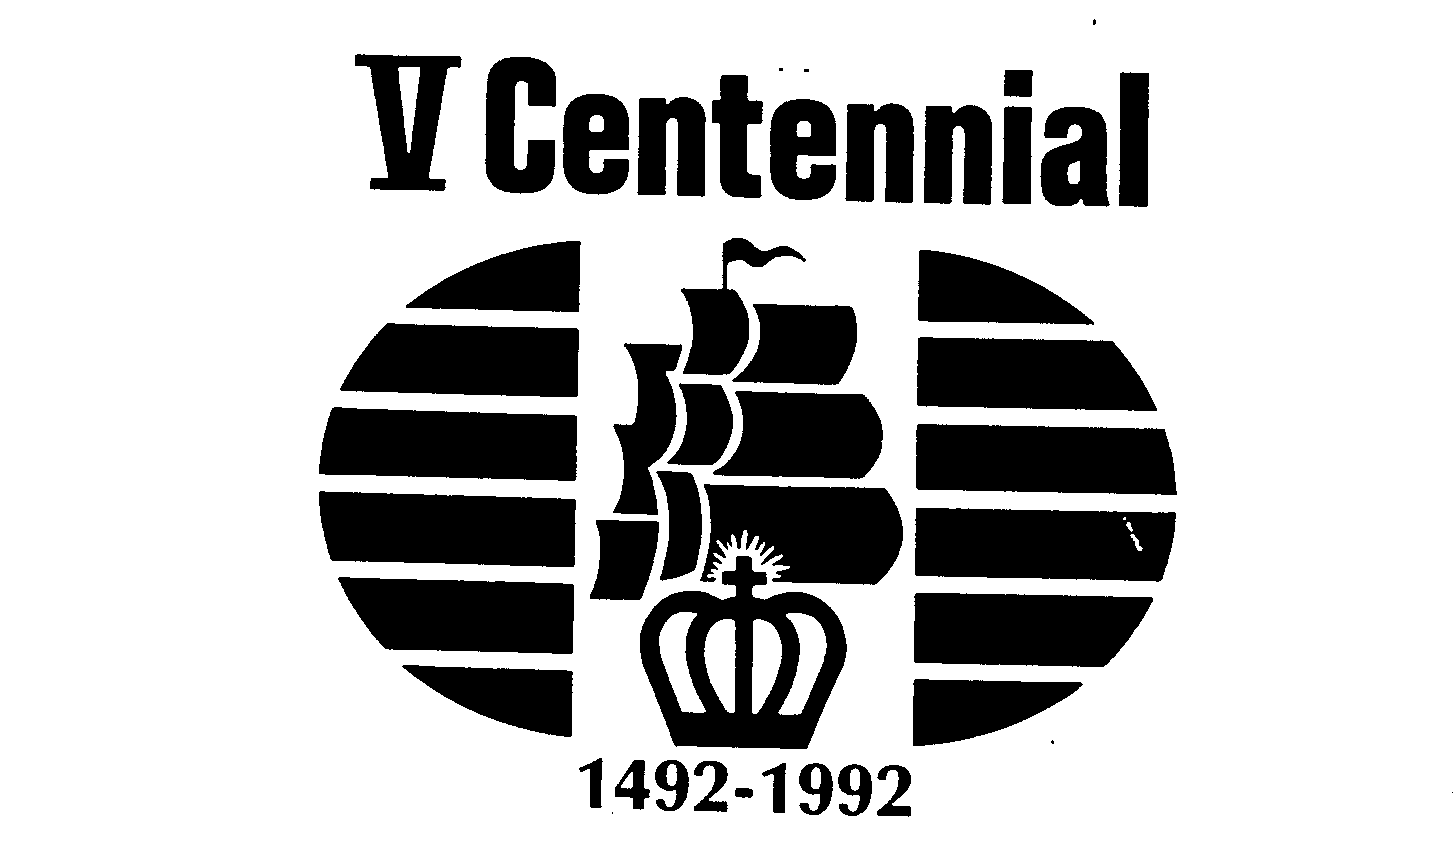  V CENTENNIAL 1492-1992